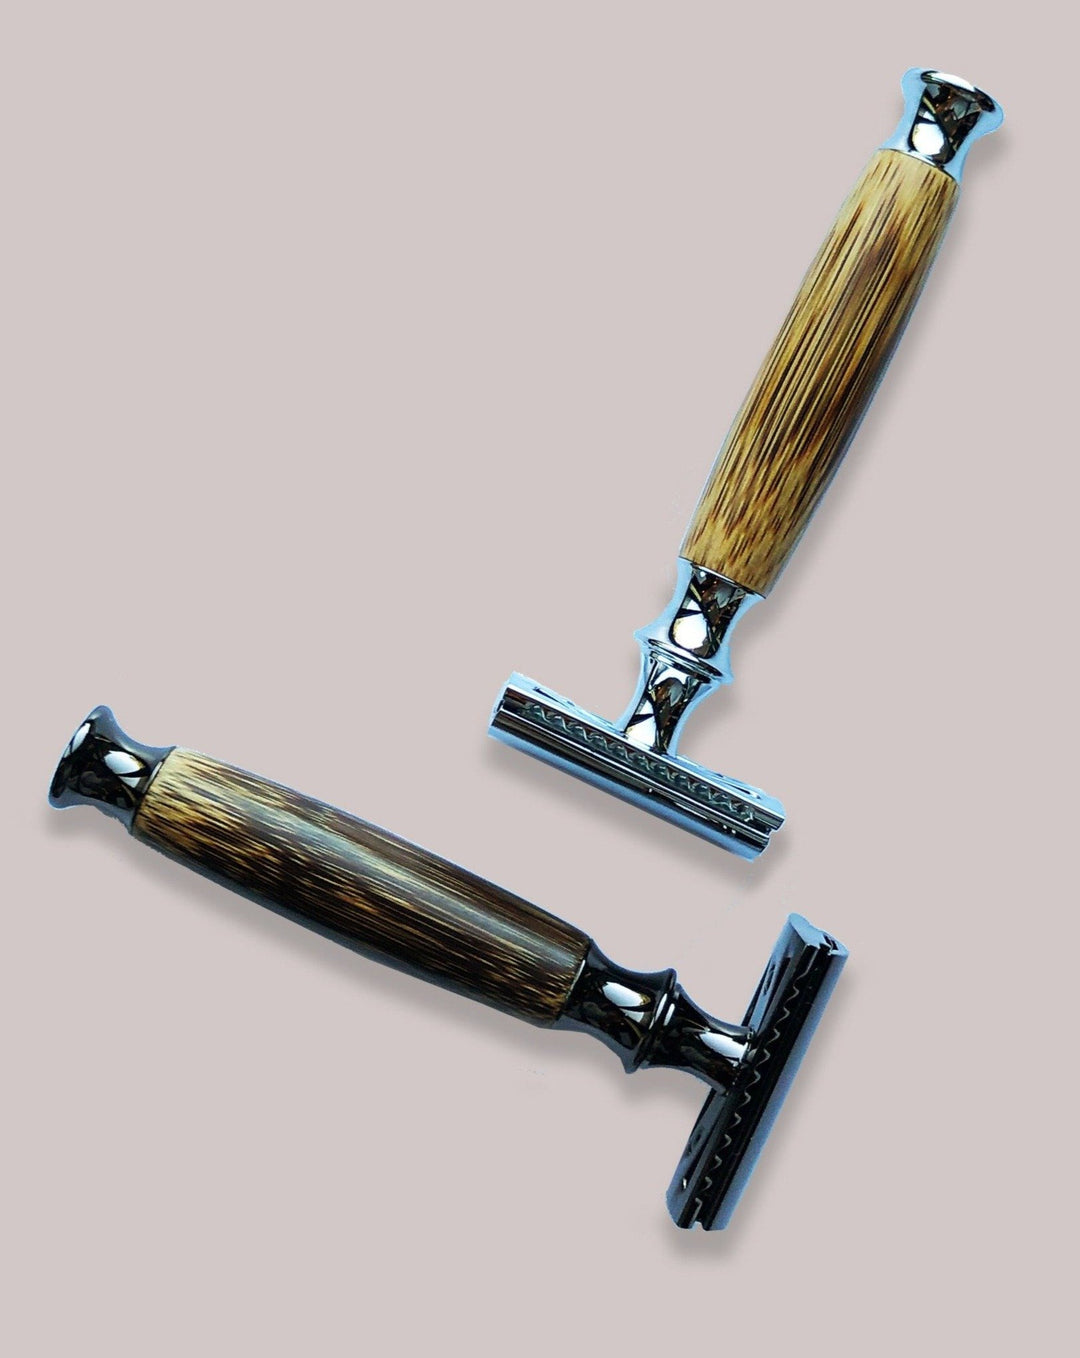 SHORELINE SHAVING SHAVING KIT Reusable Bamboo Razor  - Chrome Silver Reusable Double Edged Bamboo Razor | Chrome Silver | 3133